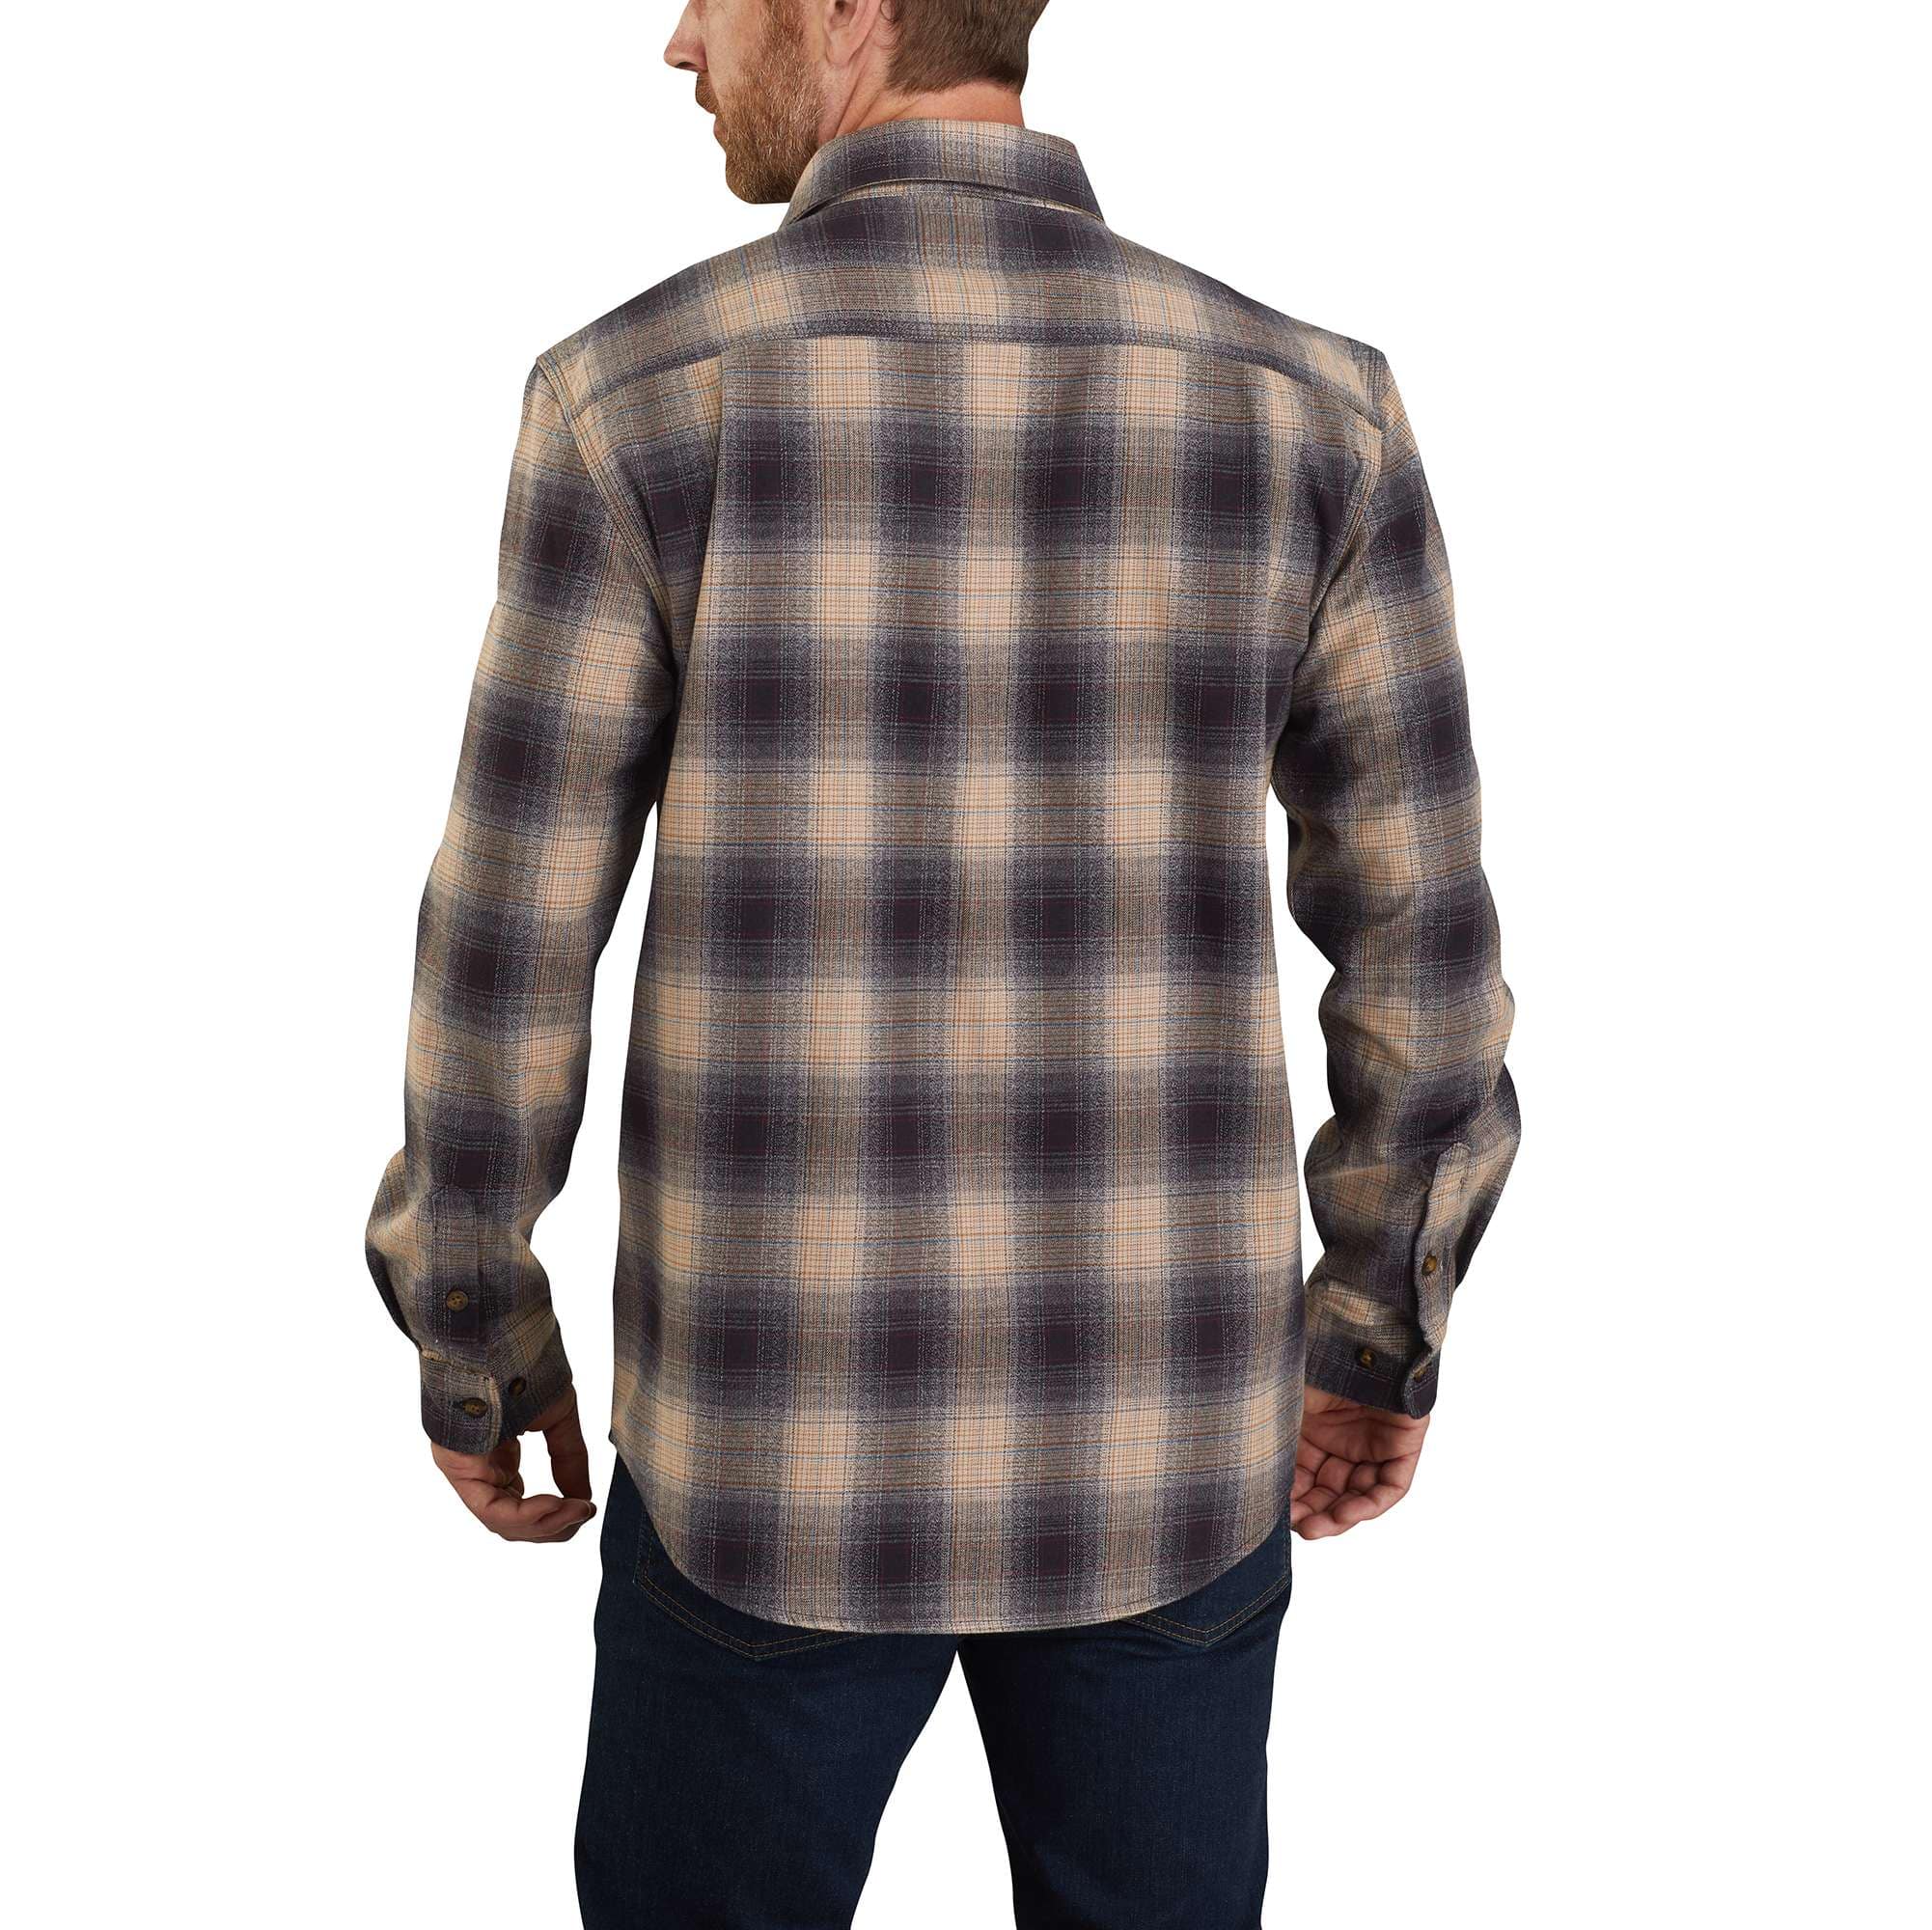 Details about   Carhartt Men's Flannel Long-Sleeve Plaid Shirt 